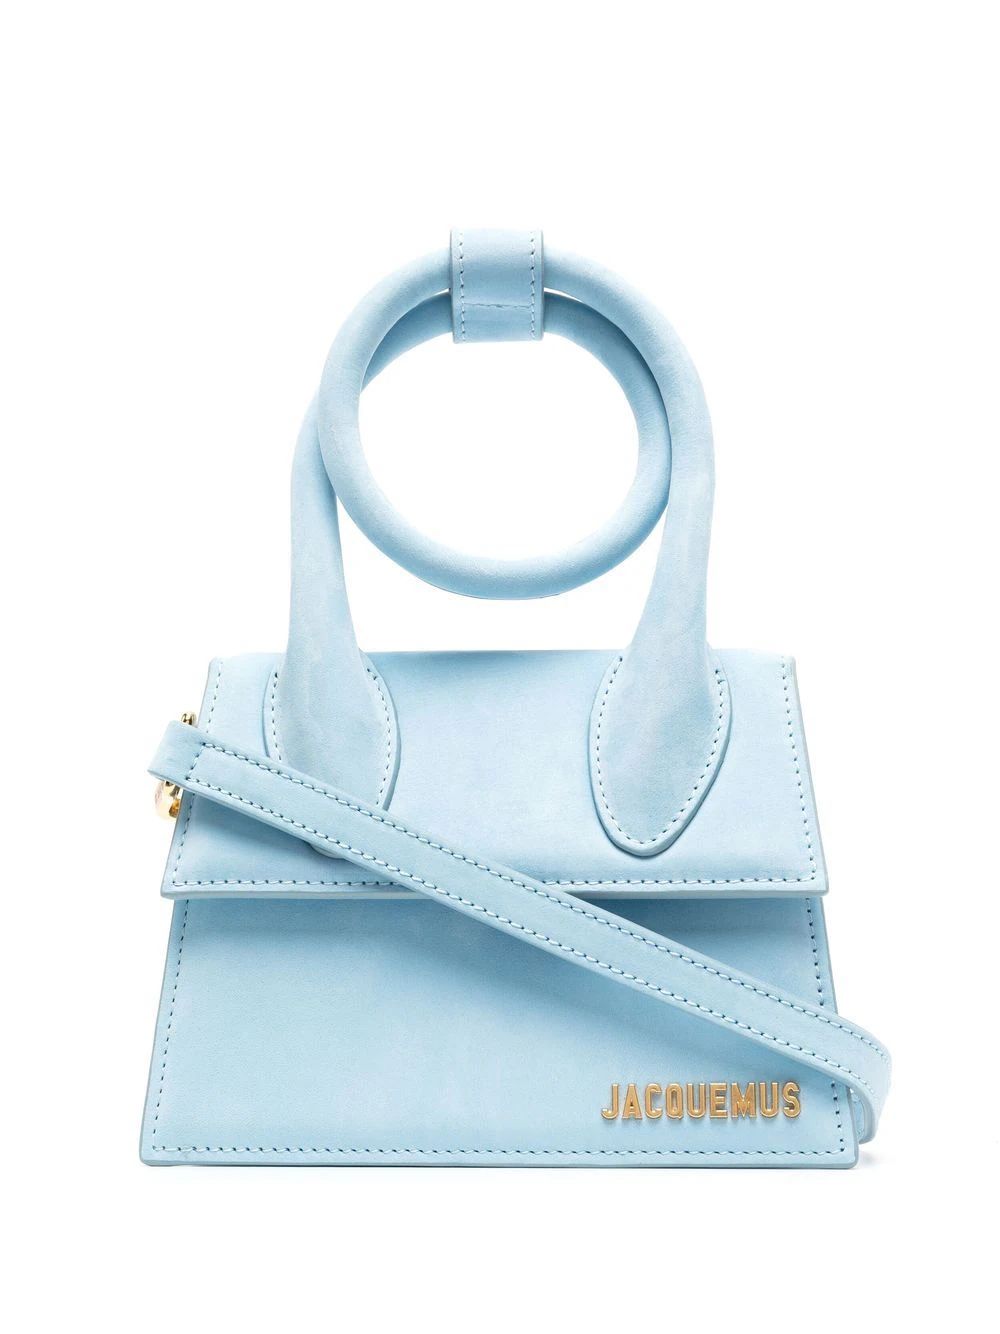 Jacquemus Le Chiquito Neud top-handle Bag - Farfetch | Farfetch Global